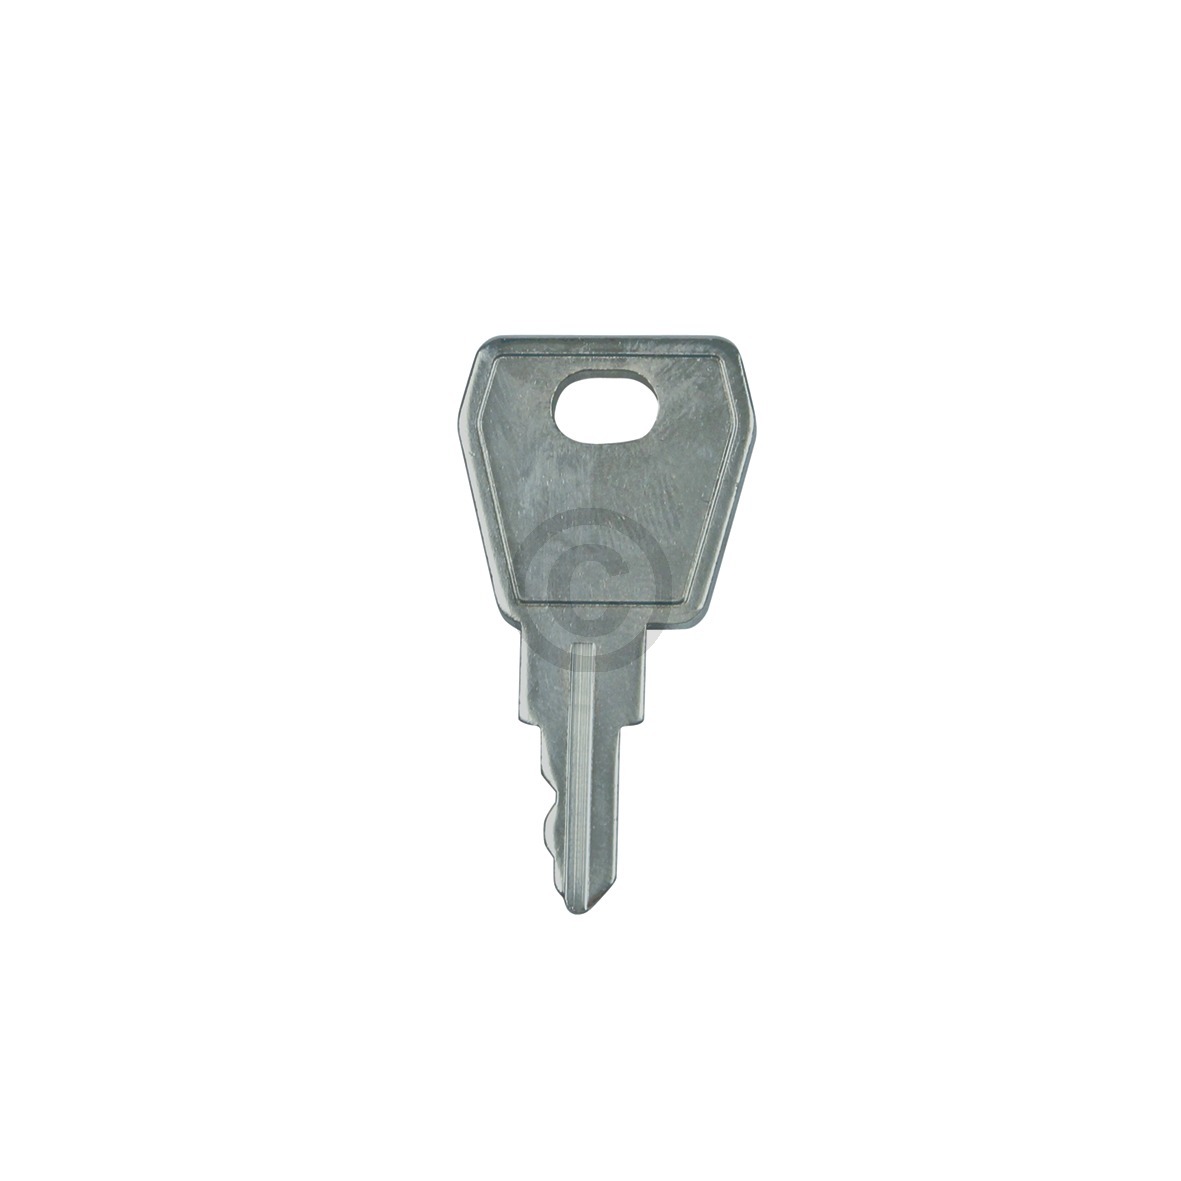 Schlüssel 14606 606 ORIGINAL Liebherr key Zünds